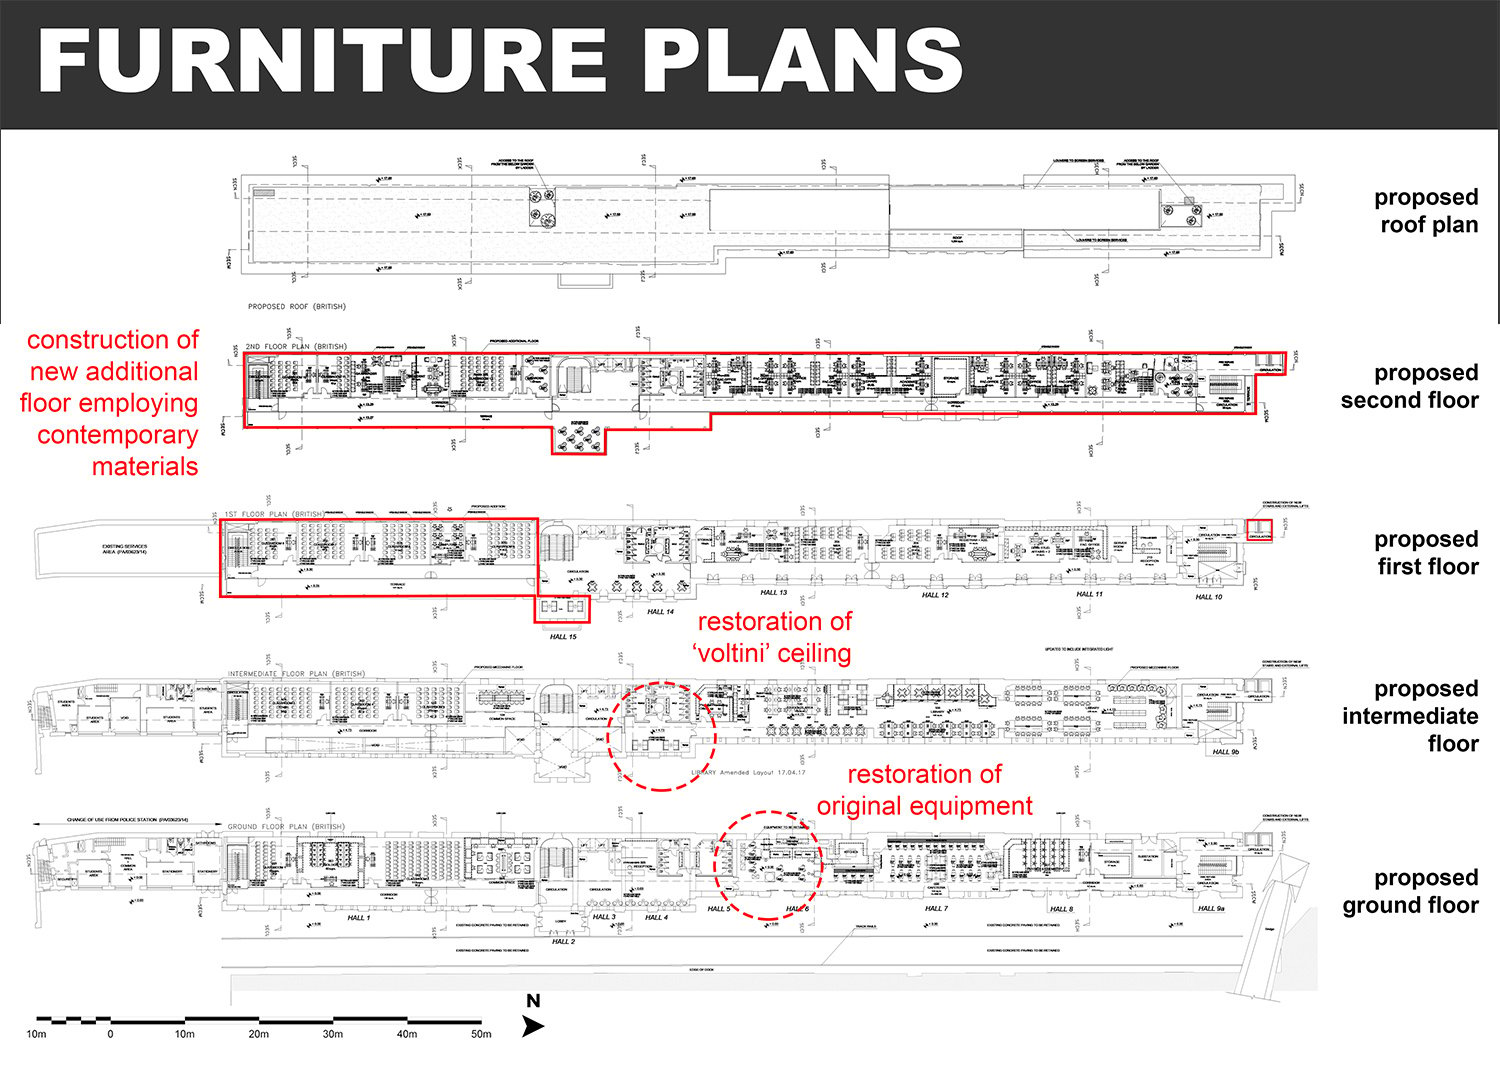 Furniture plans | Edwin Mintoff Architects